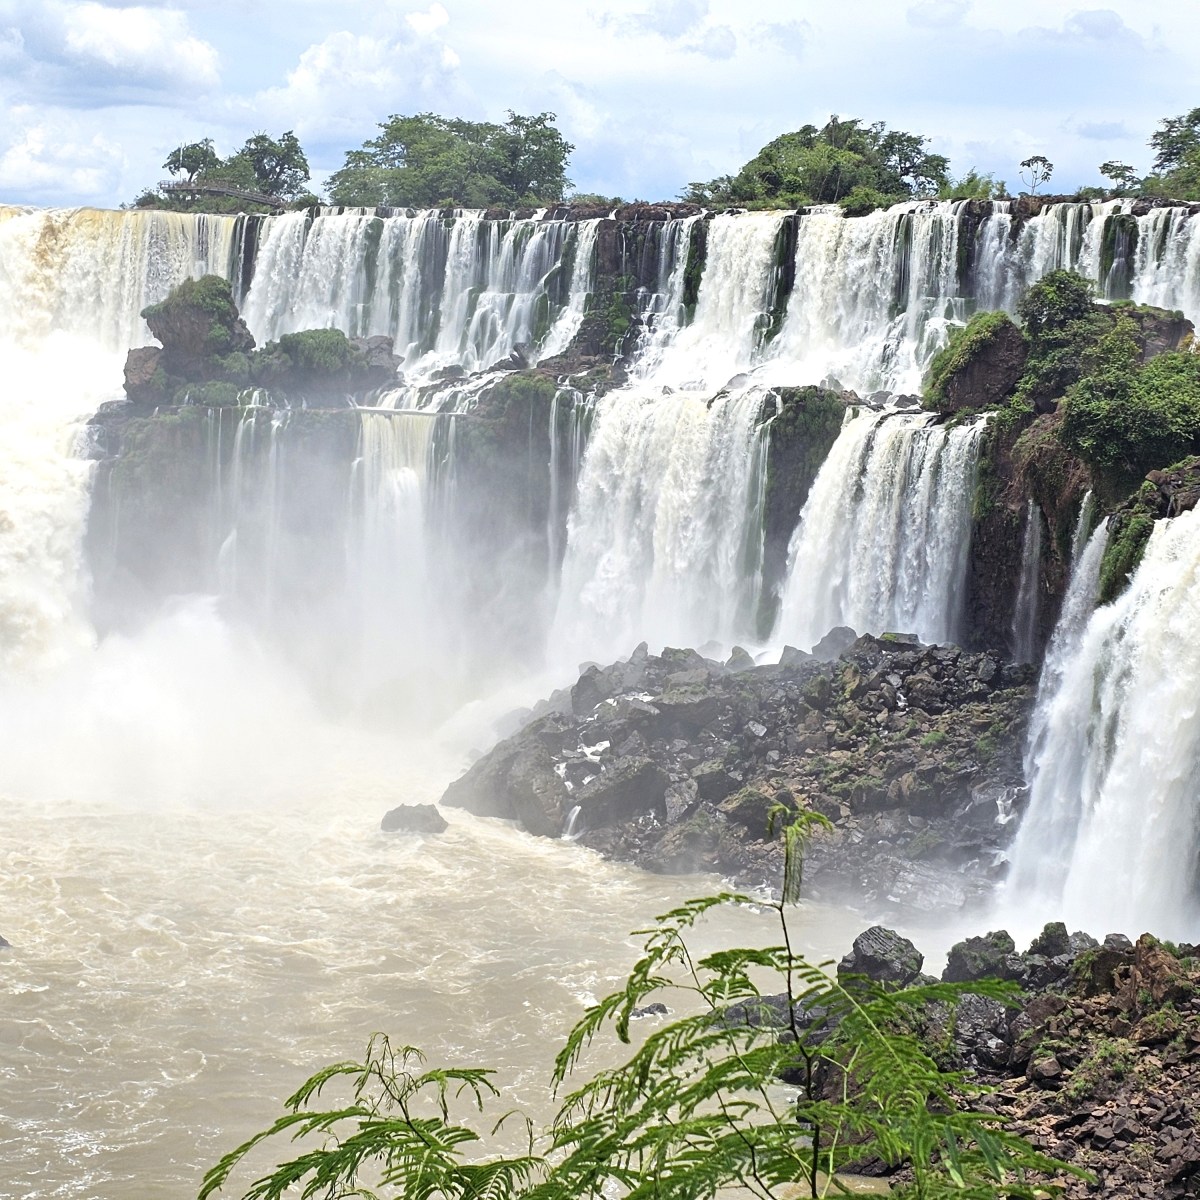 Guide to Visiting Iguazu Falls in Argentina